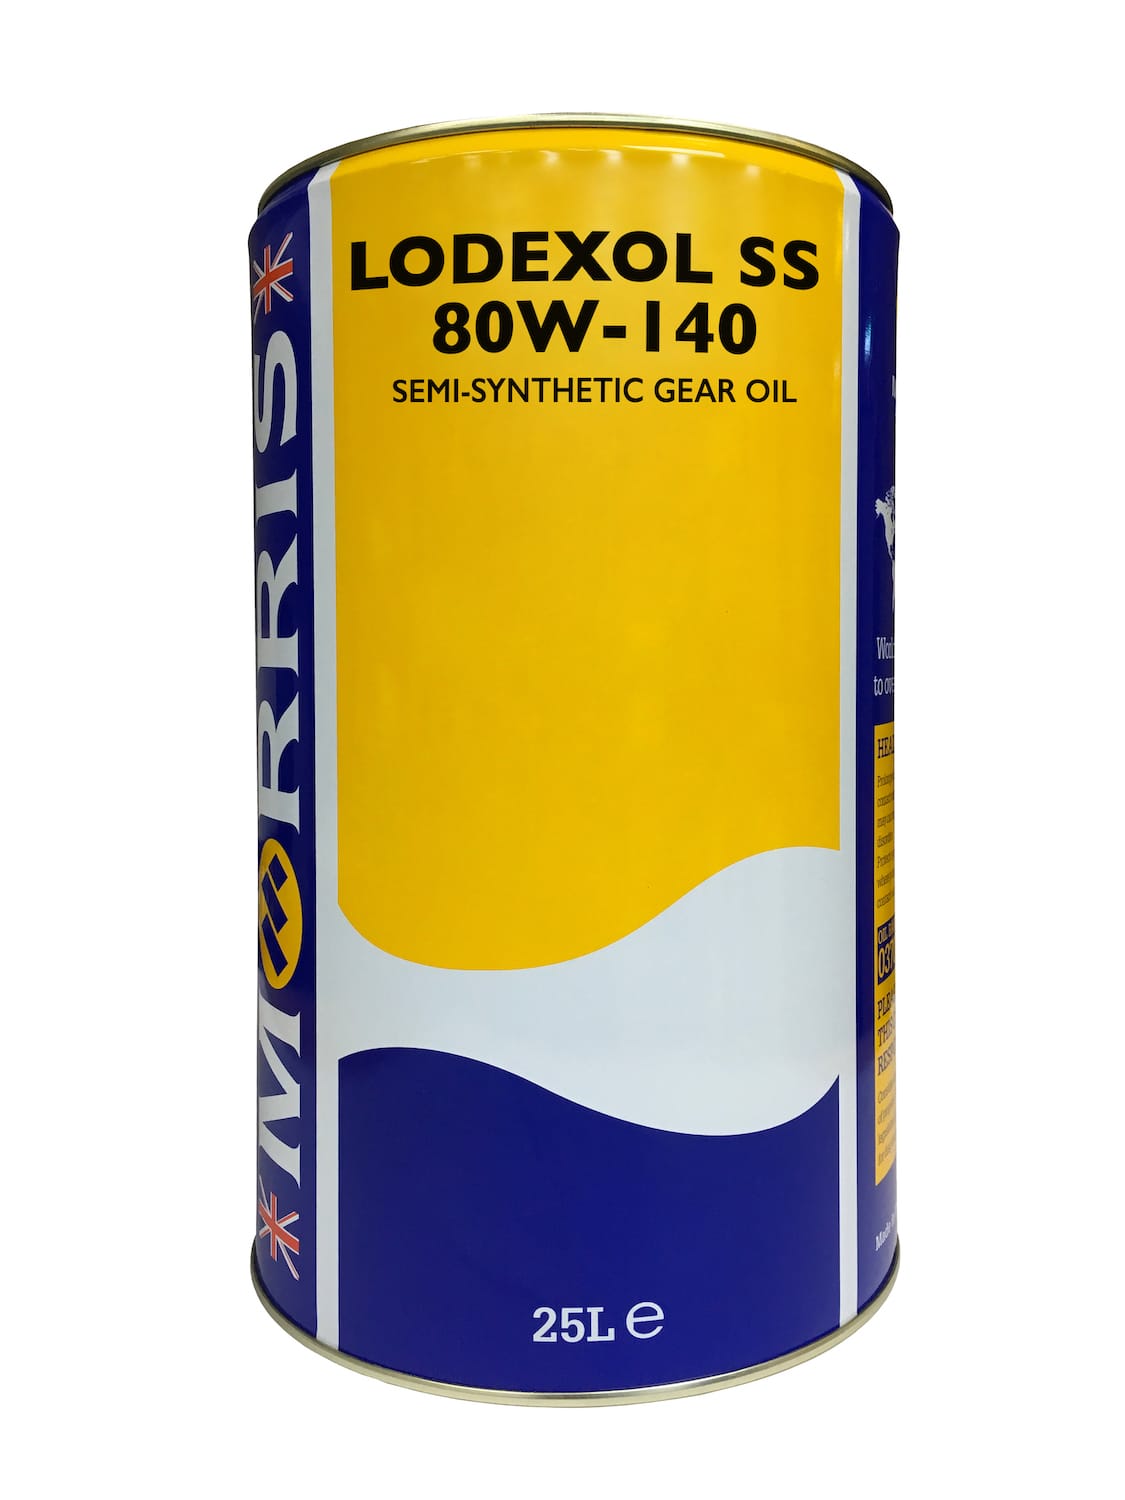 Lodexol SS 80W-140 Gear Oil